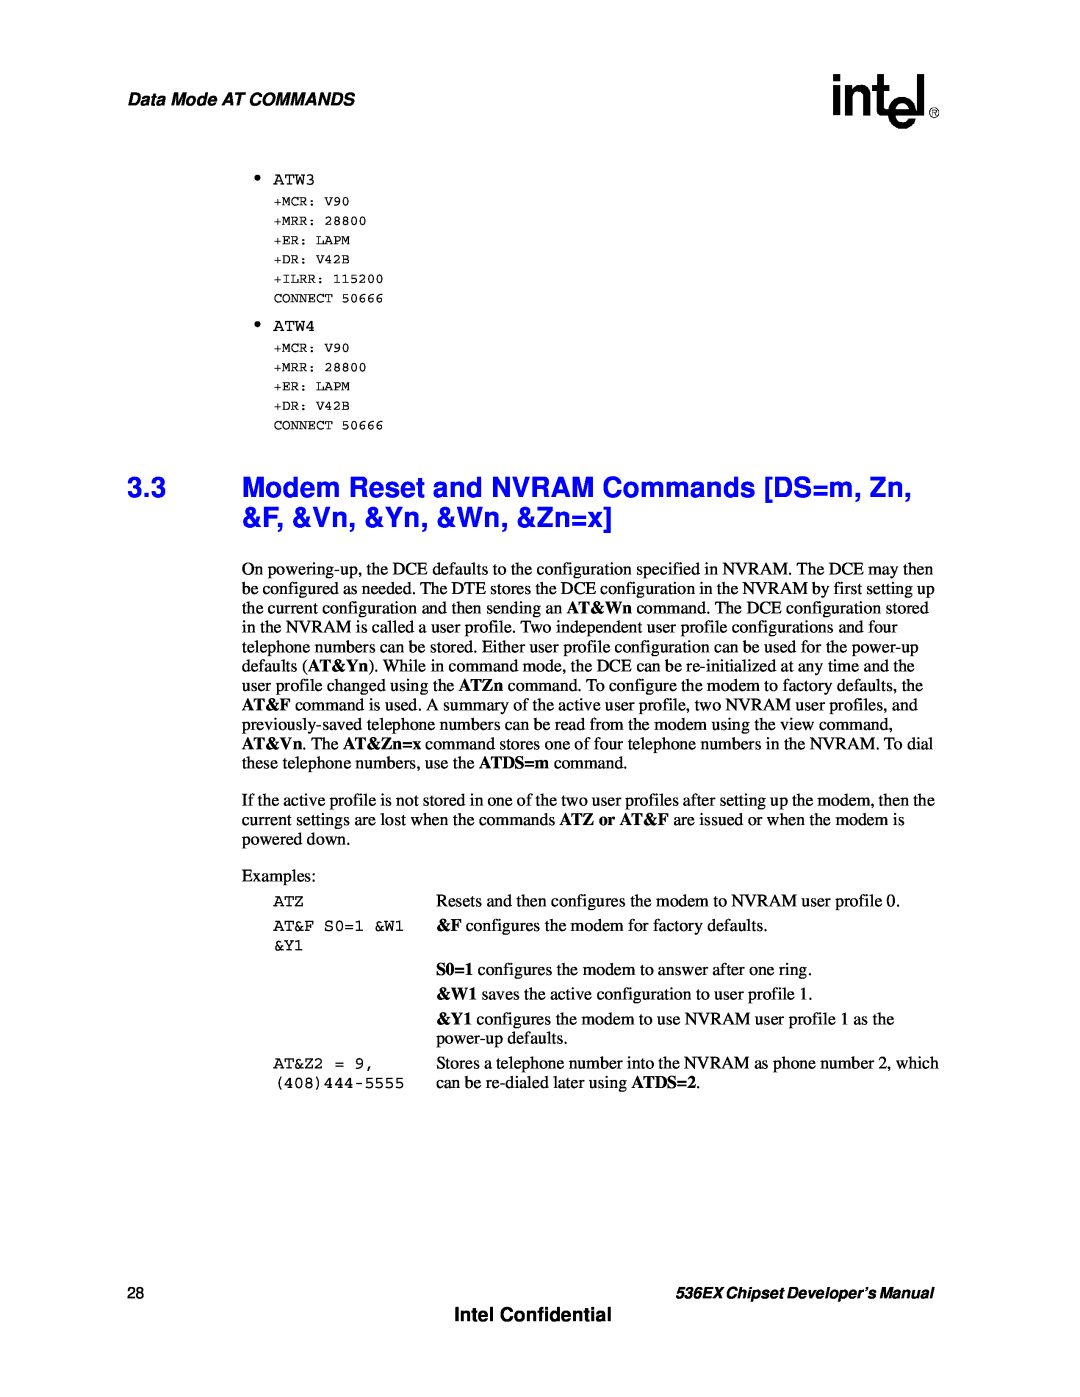 Intel 536EX manual Intel Confidential, Data Mode AT COMMANDS, Examples 